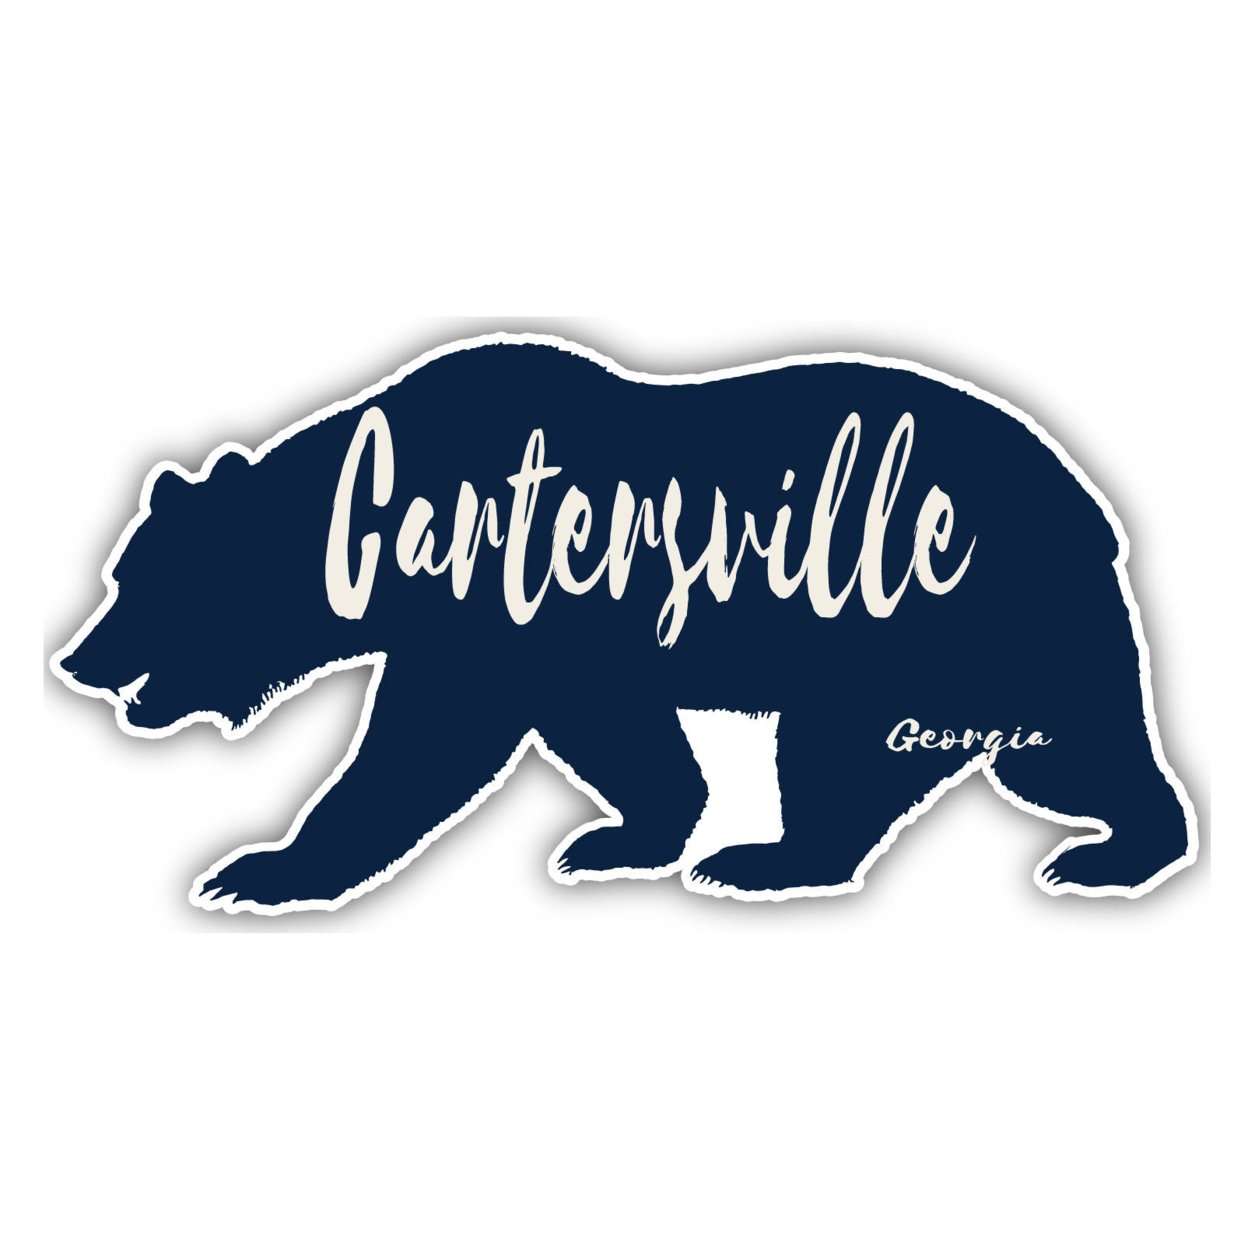 Cartersville Georgia Souvenir Decorative Stickers (Choose Theme And Size) - Single Unit, 6-Inch, Bear